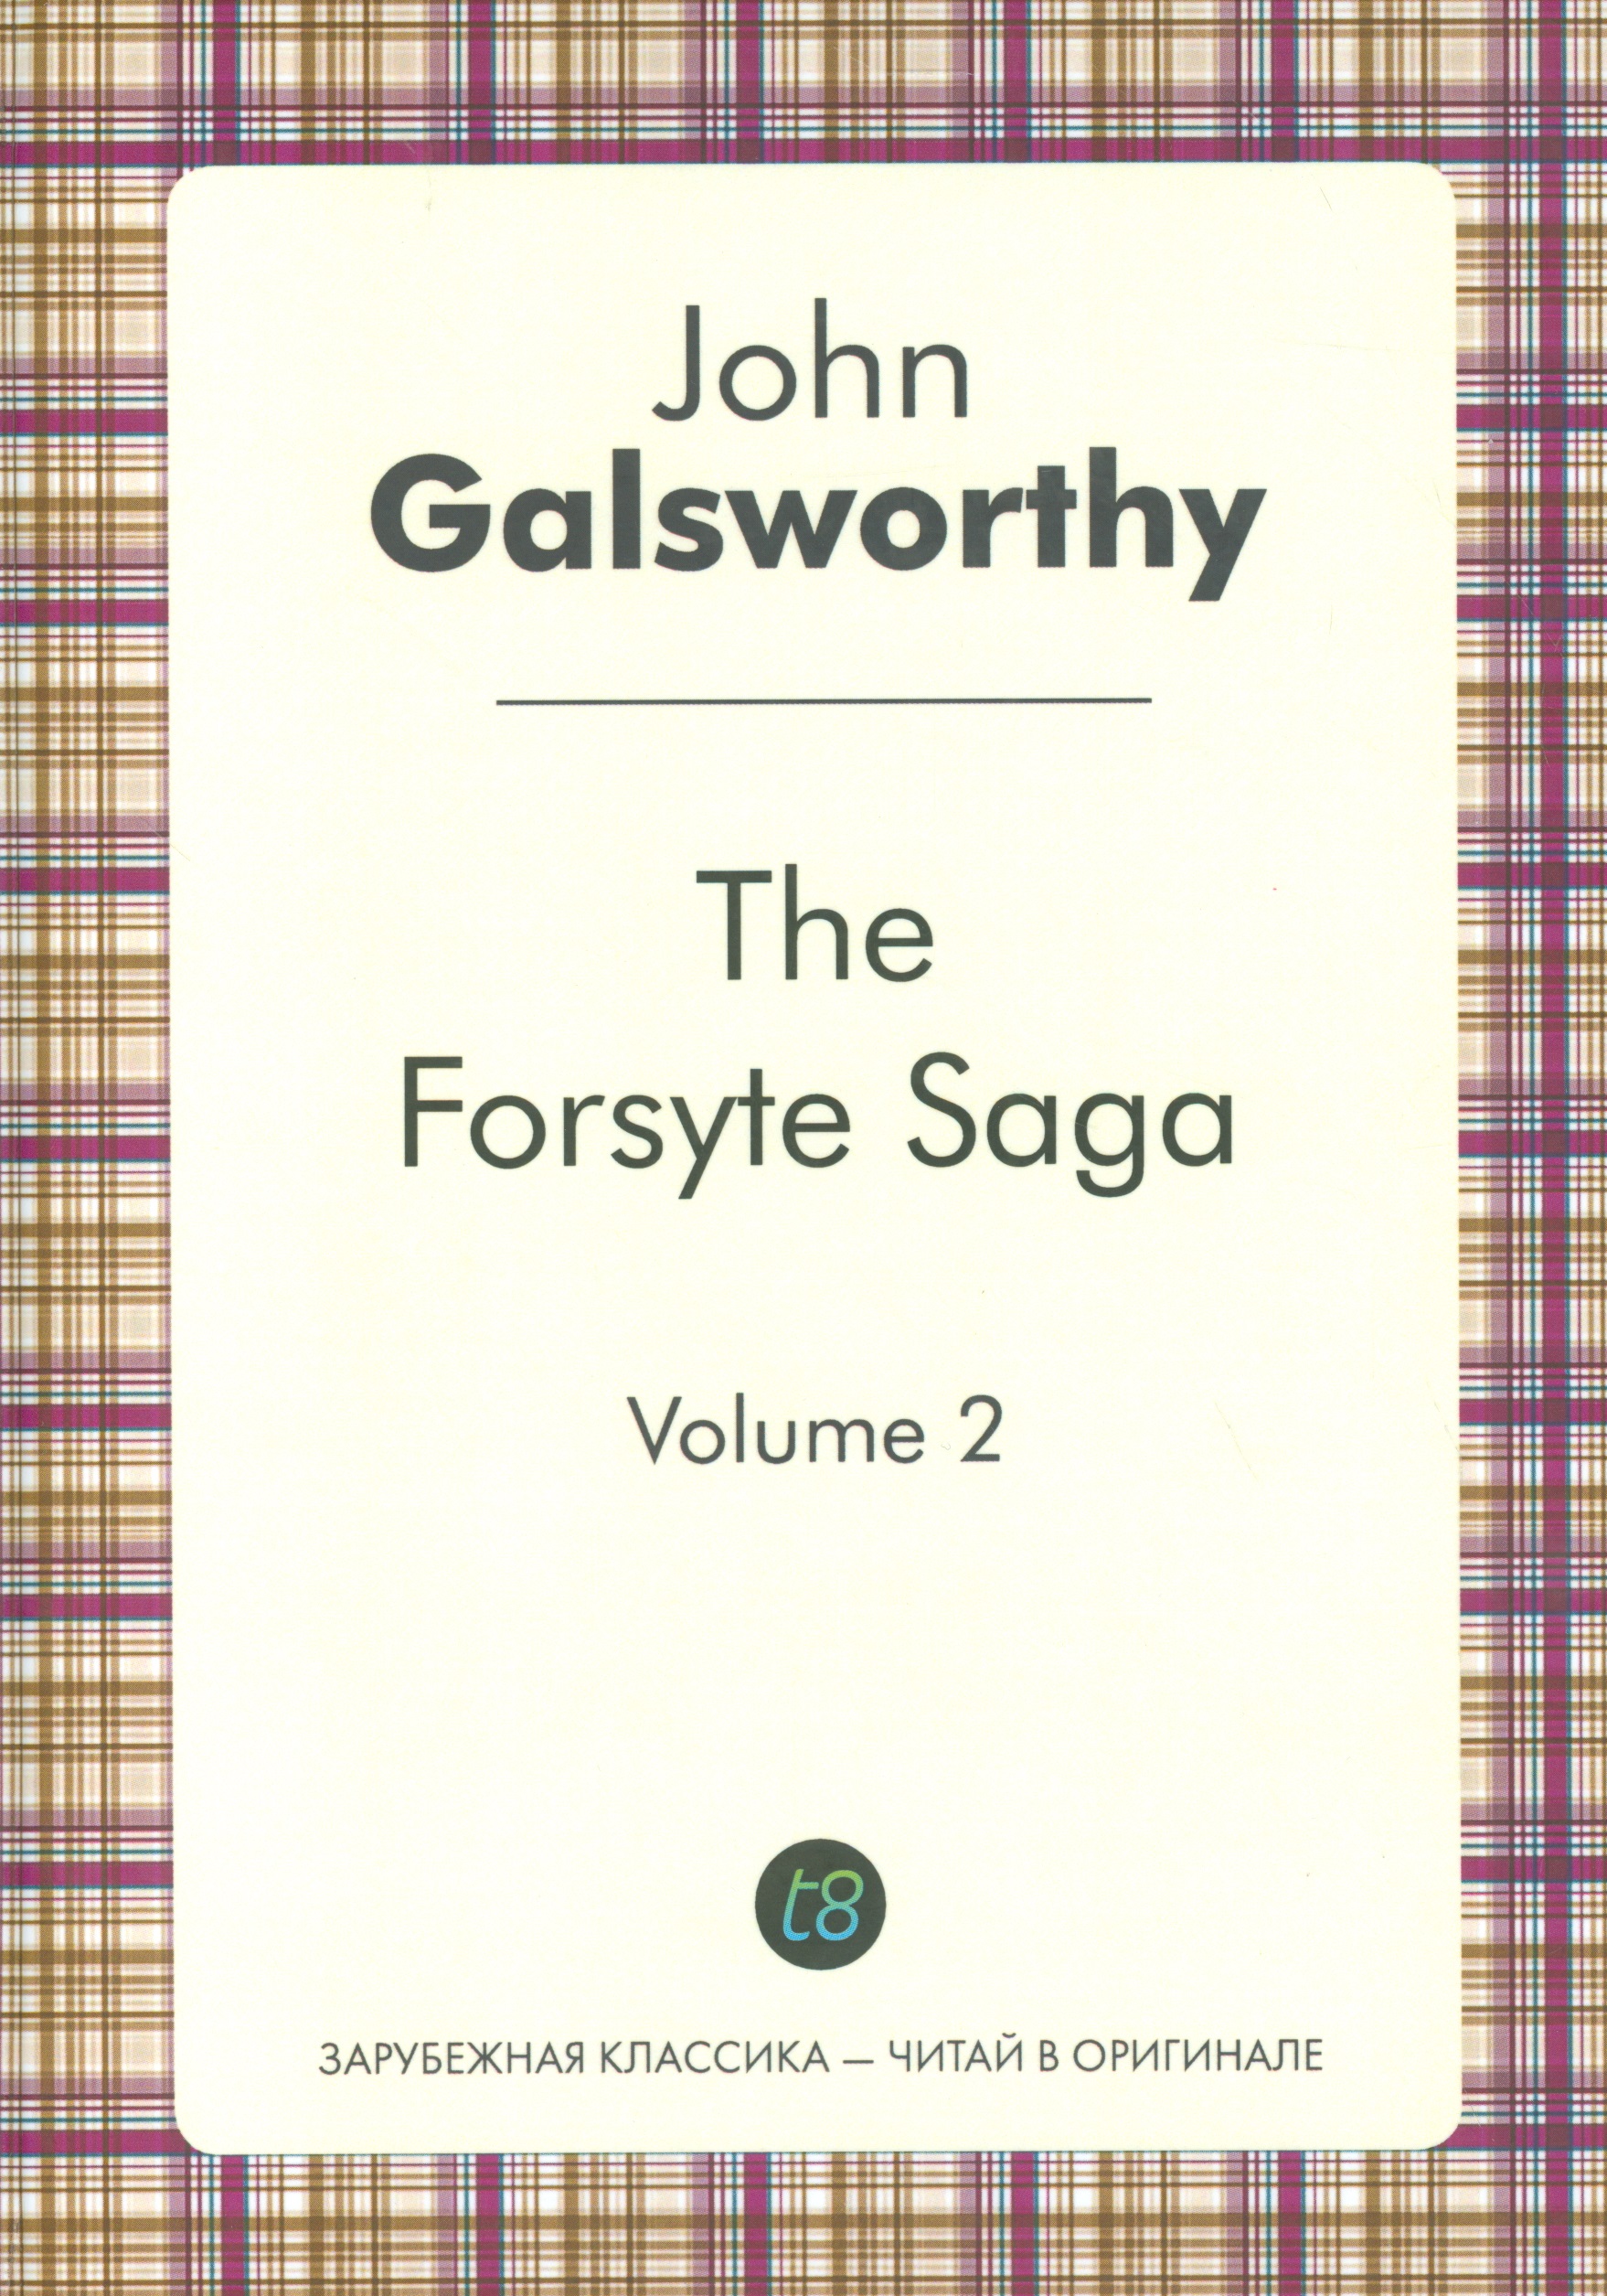 galsworthy j the forsyte saga awakening to let vol 3 сага о форсайтах на англ яз Голсуорси Джон The Forsyte Saga. Vol. 2. = Сага о Форсайтах. Т. 2: цикл на анг.яз.